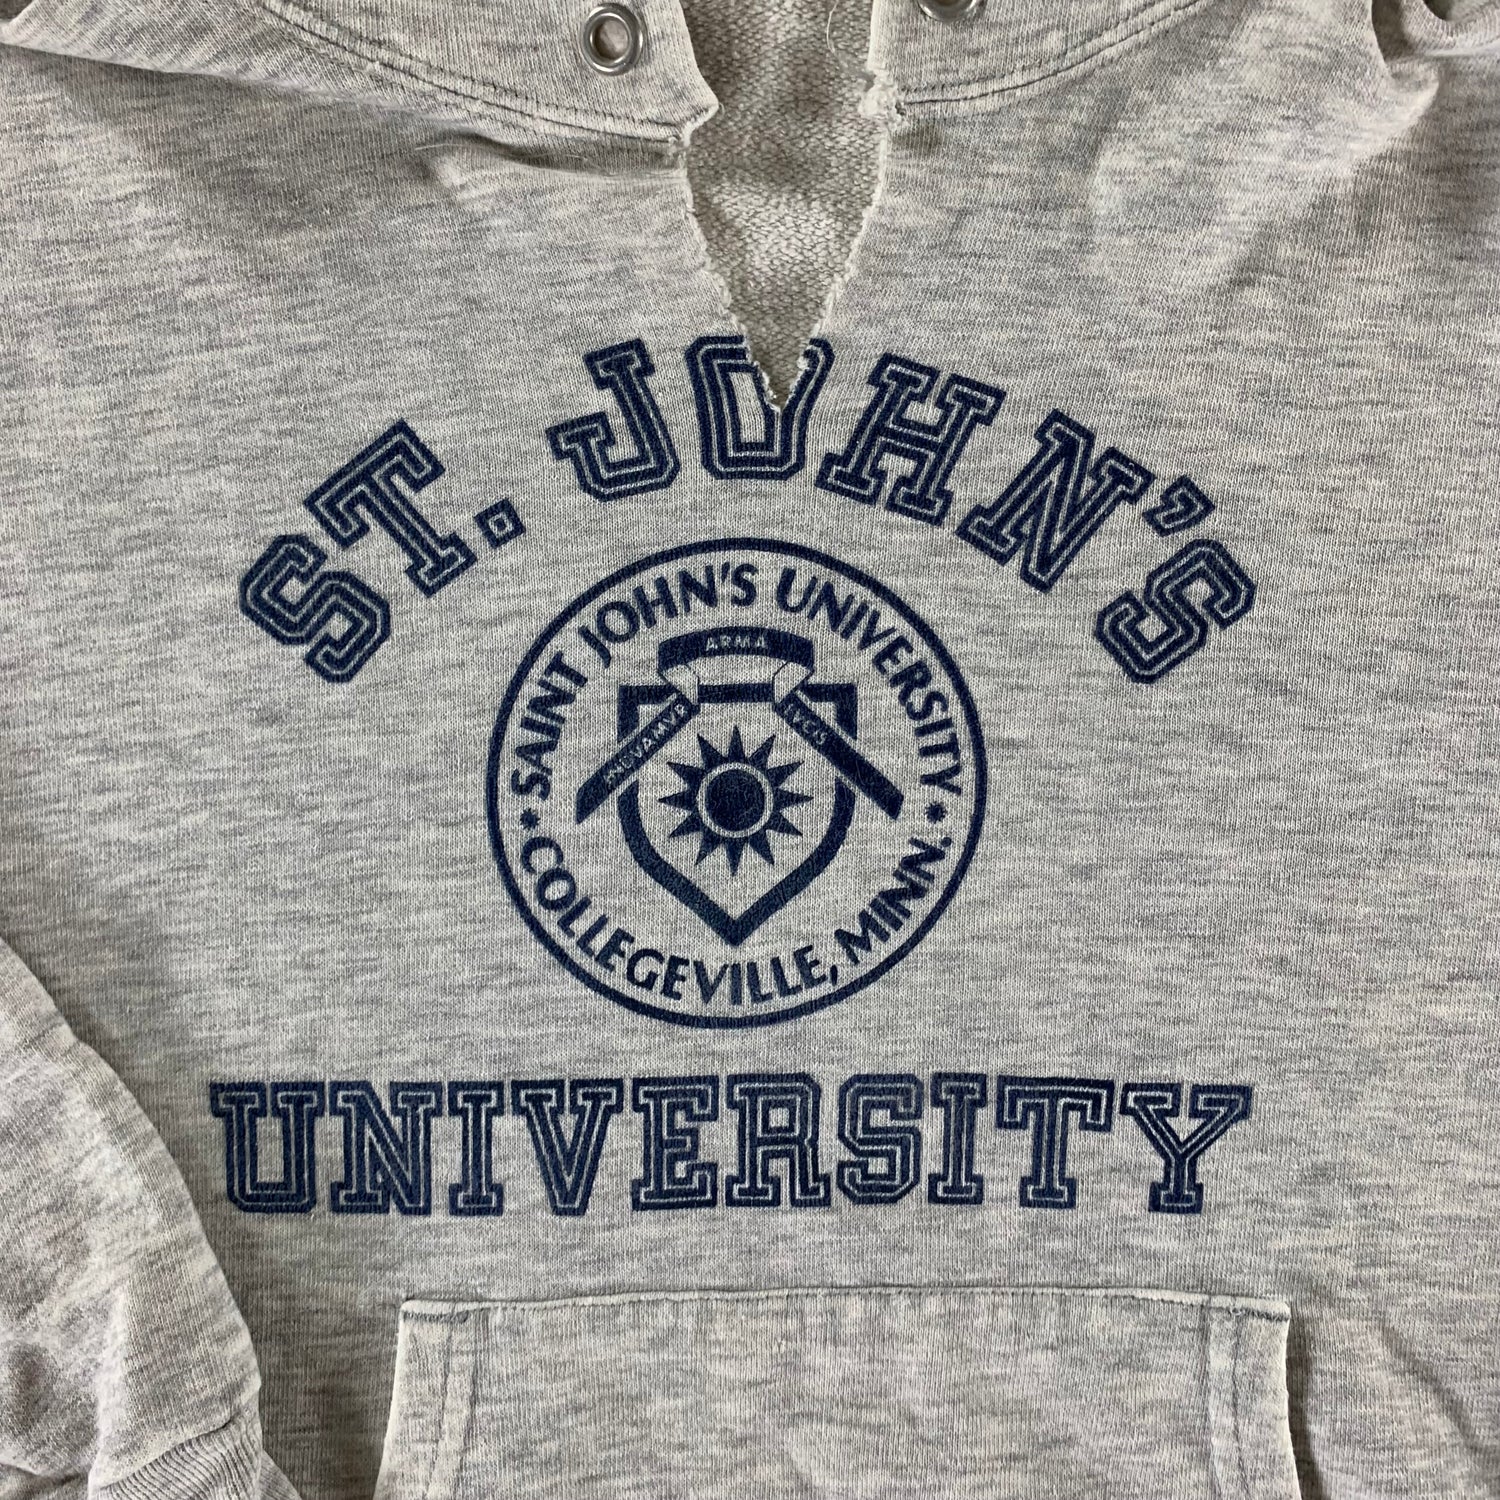 Vintage 1990s St. John's University Hooded Sweatshirt size Large